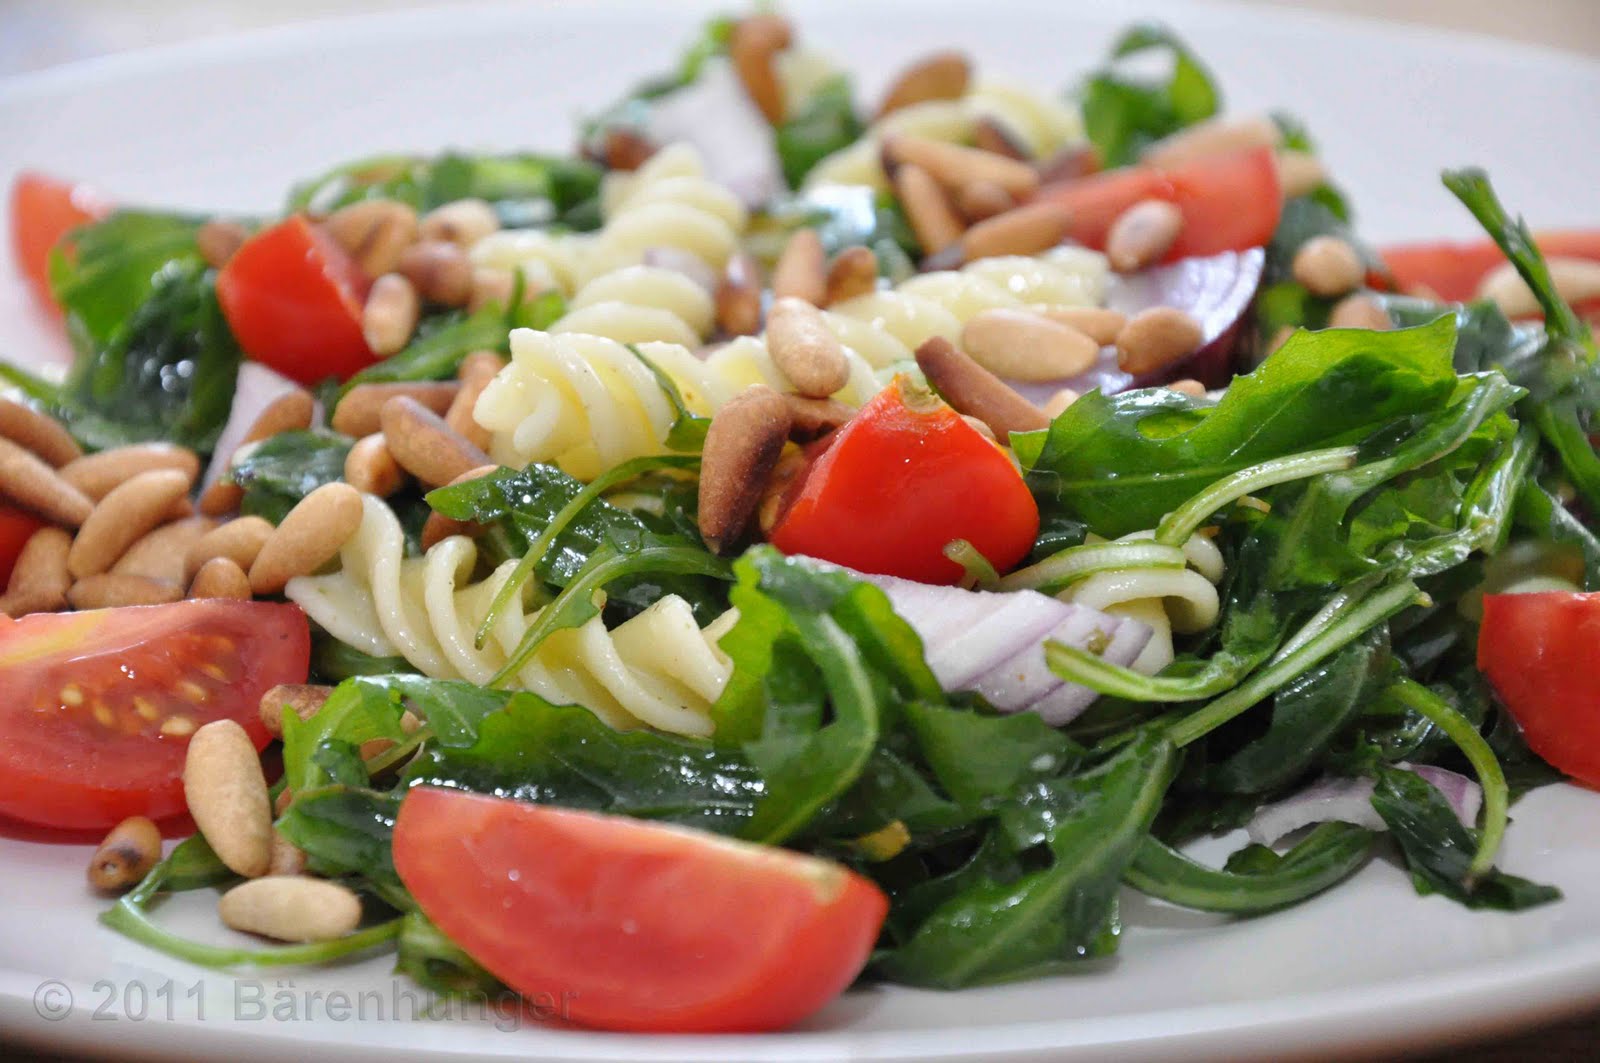 Bärenhunger: Rucola Tomaten Nudel Salat